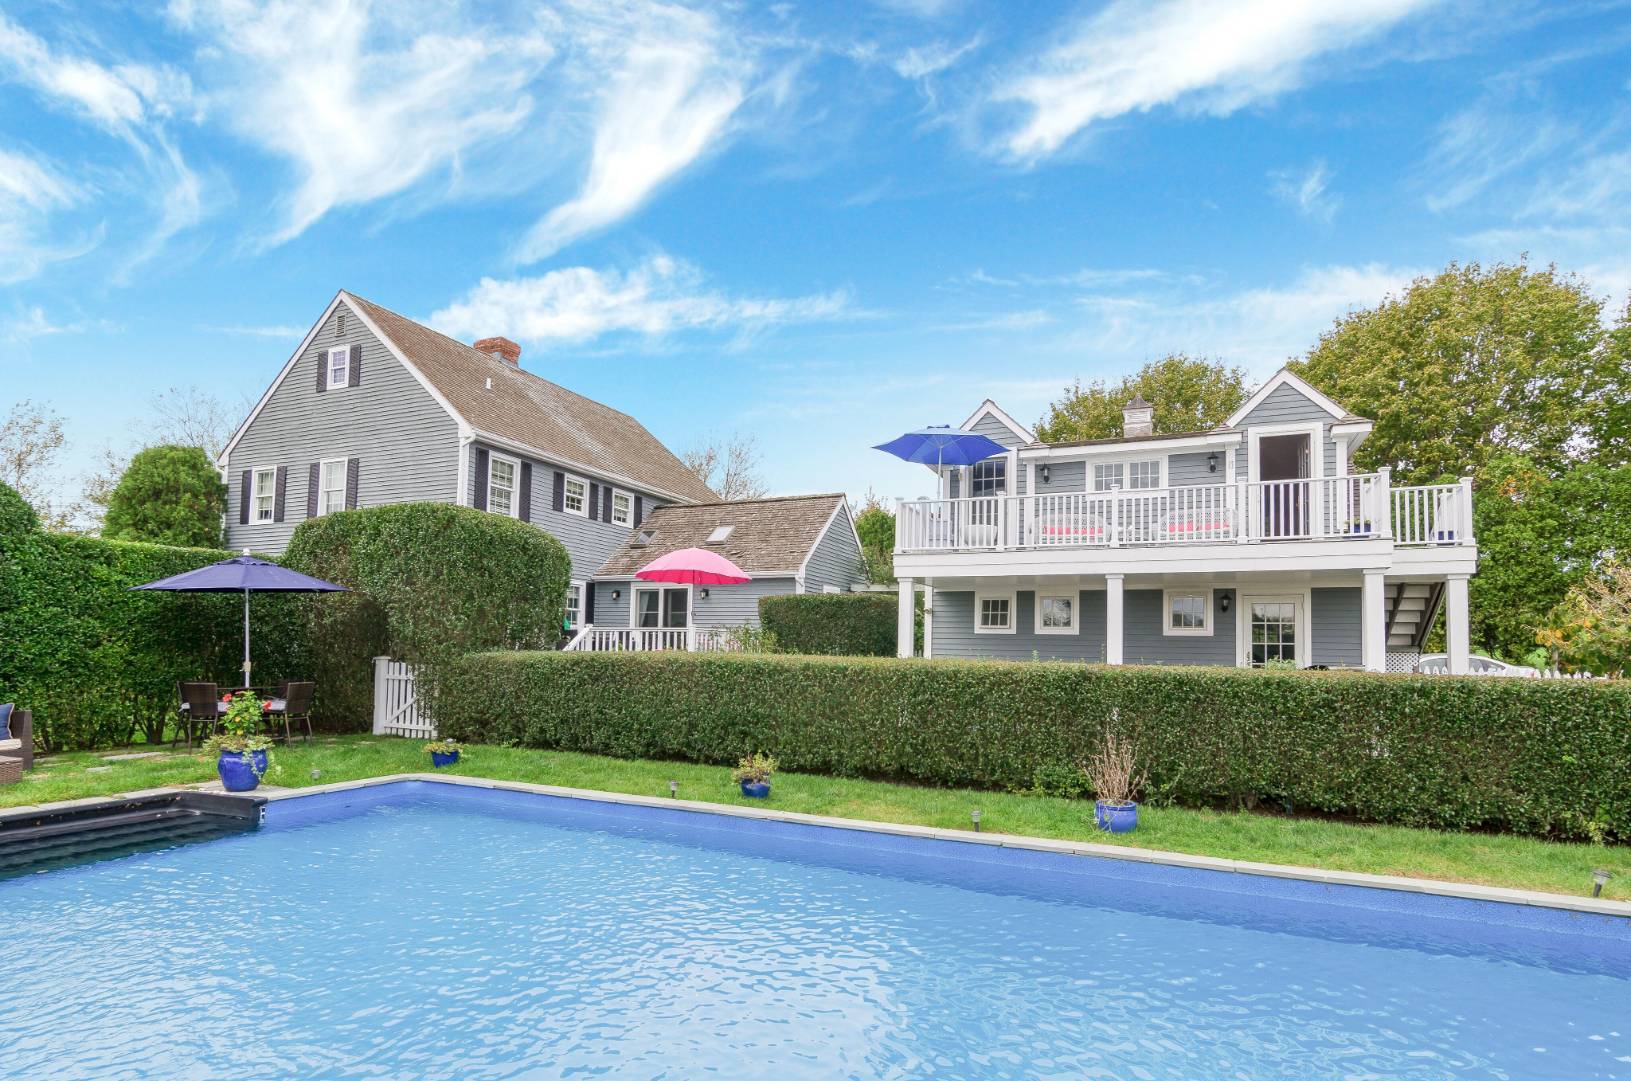 Rental Property at Water Mill, Water Mill, Hamptons, NY - Bedrooms: 5 
Bathrooms: 4.5  - $45,000 MO.